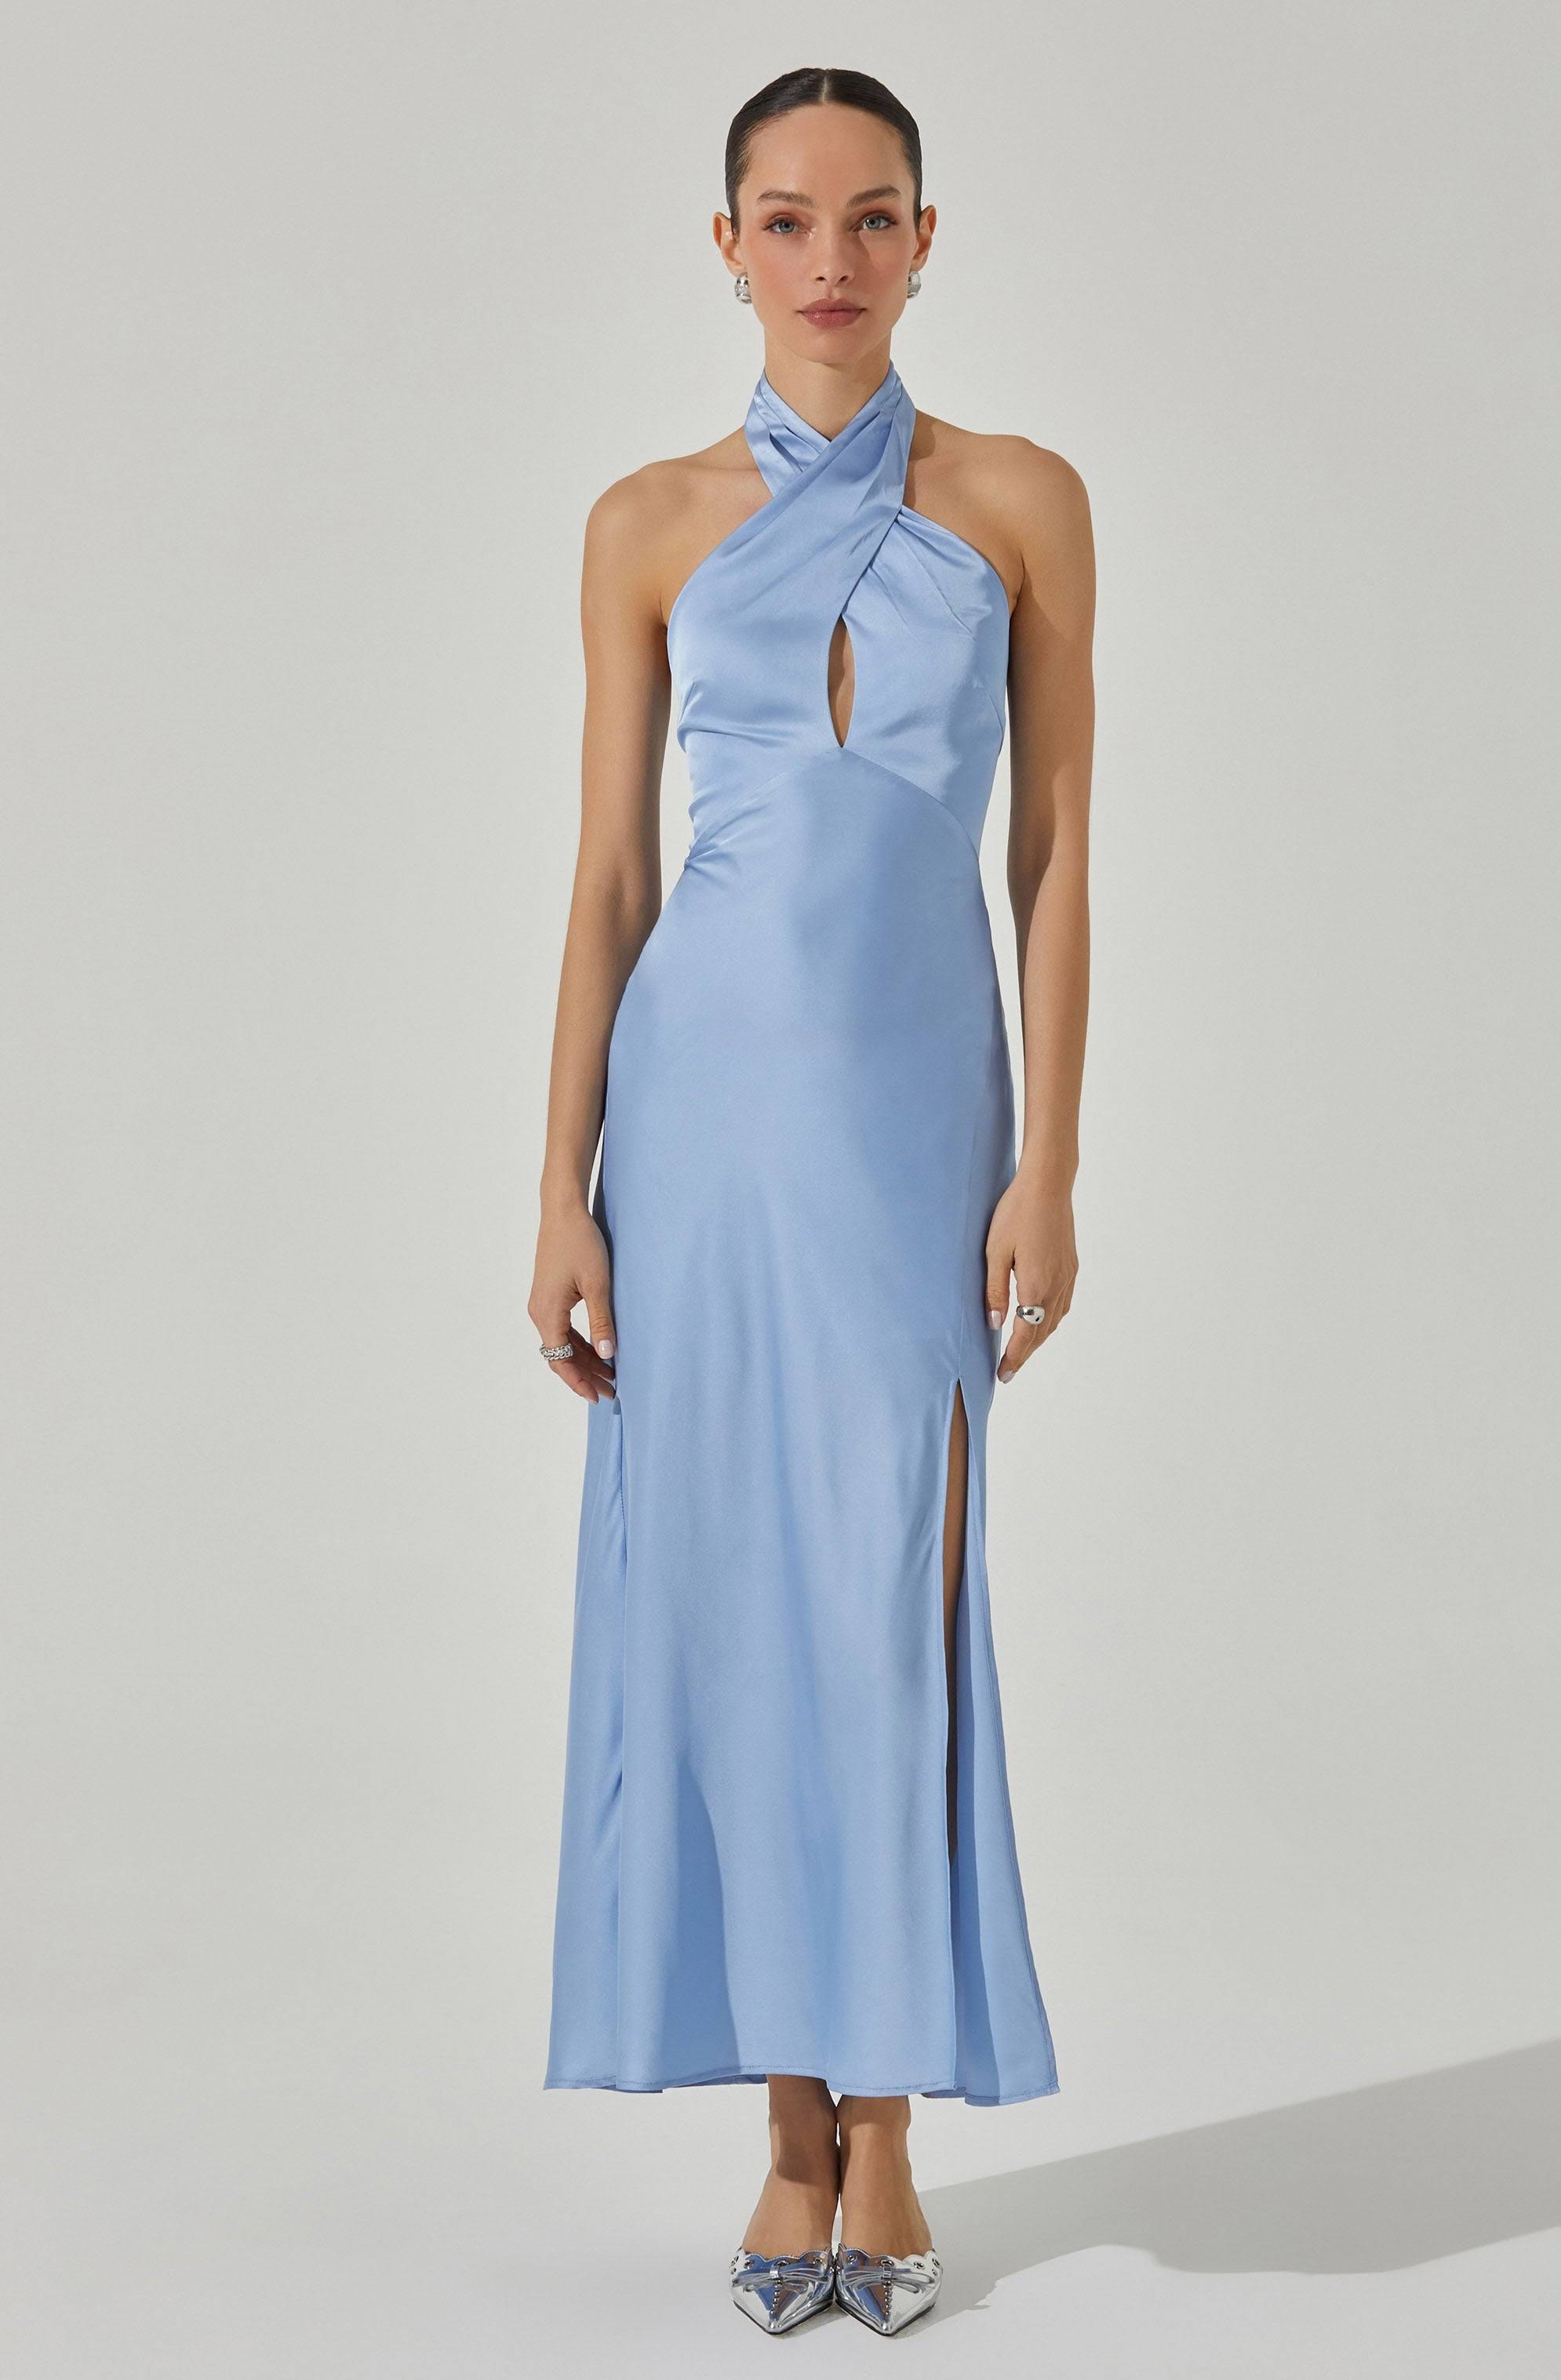 Elegant Blue Halter Midi Dress with Crisscross Accent | Image